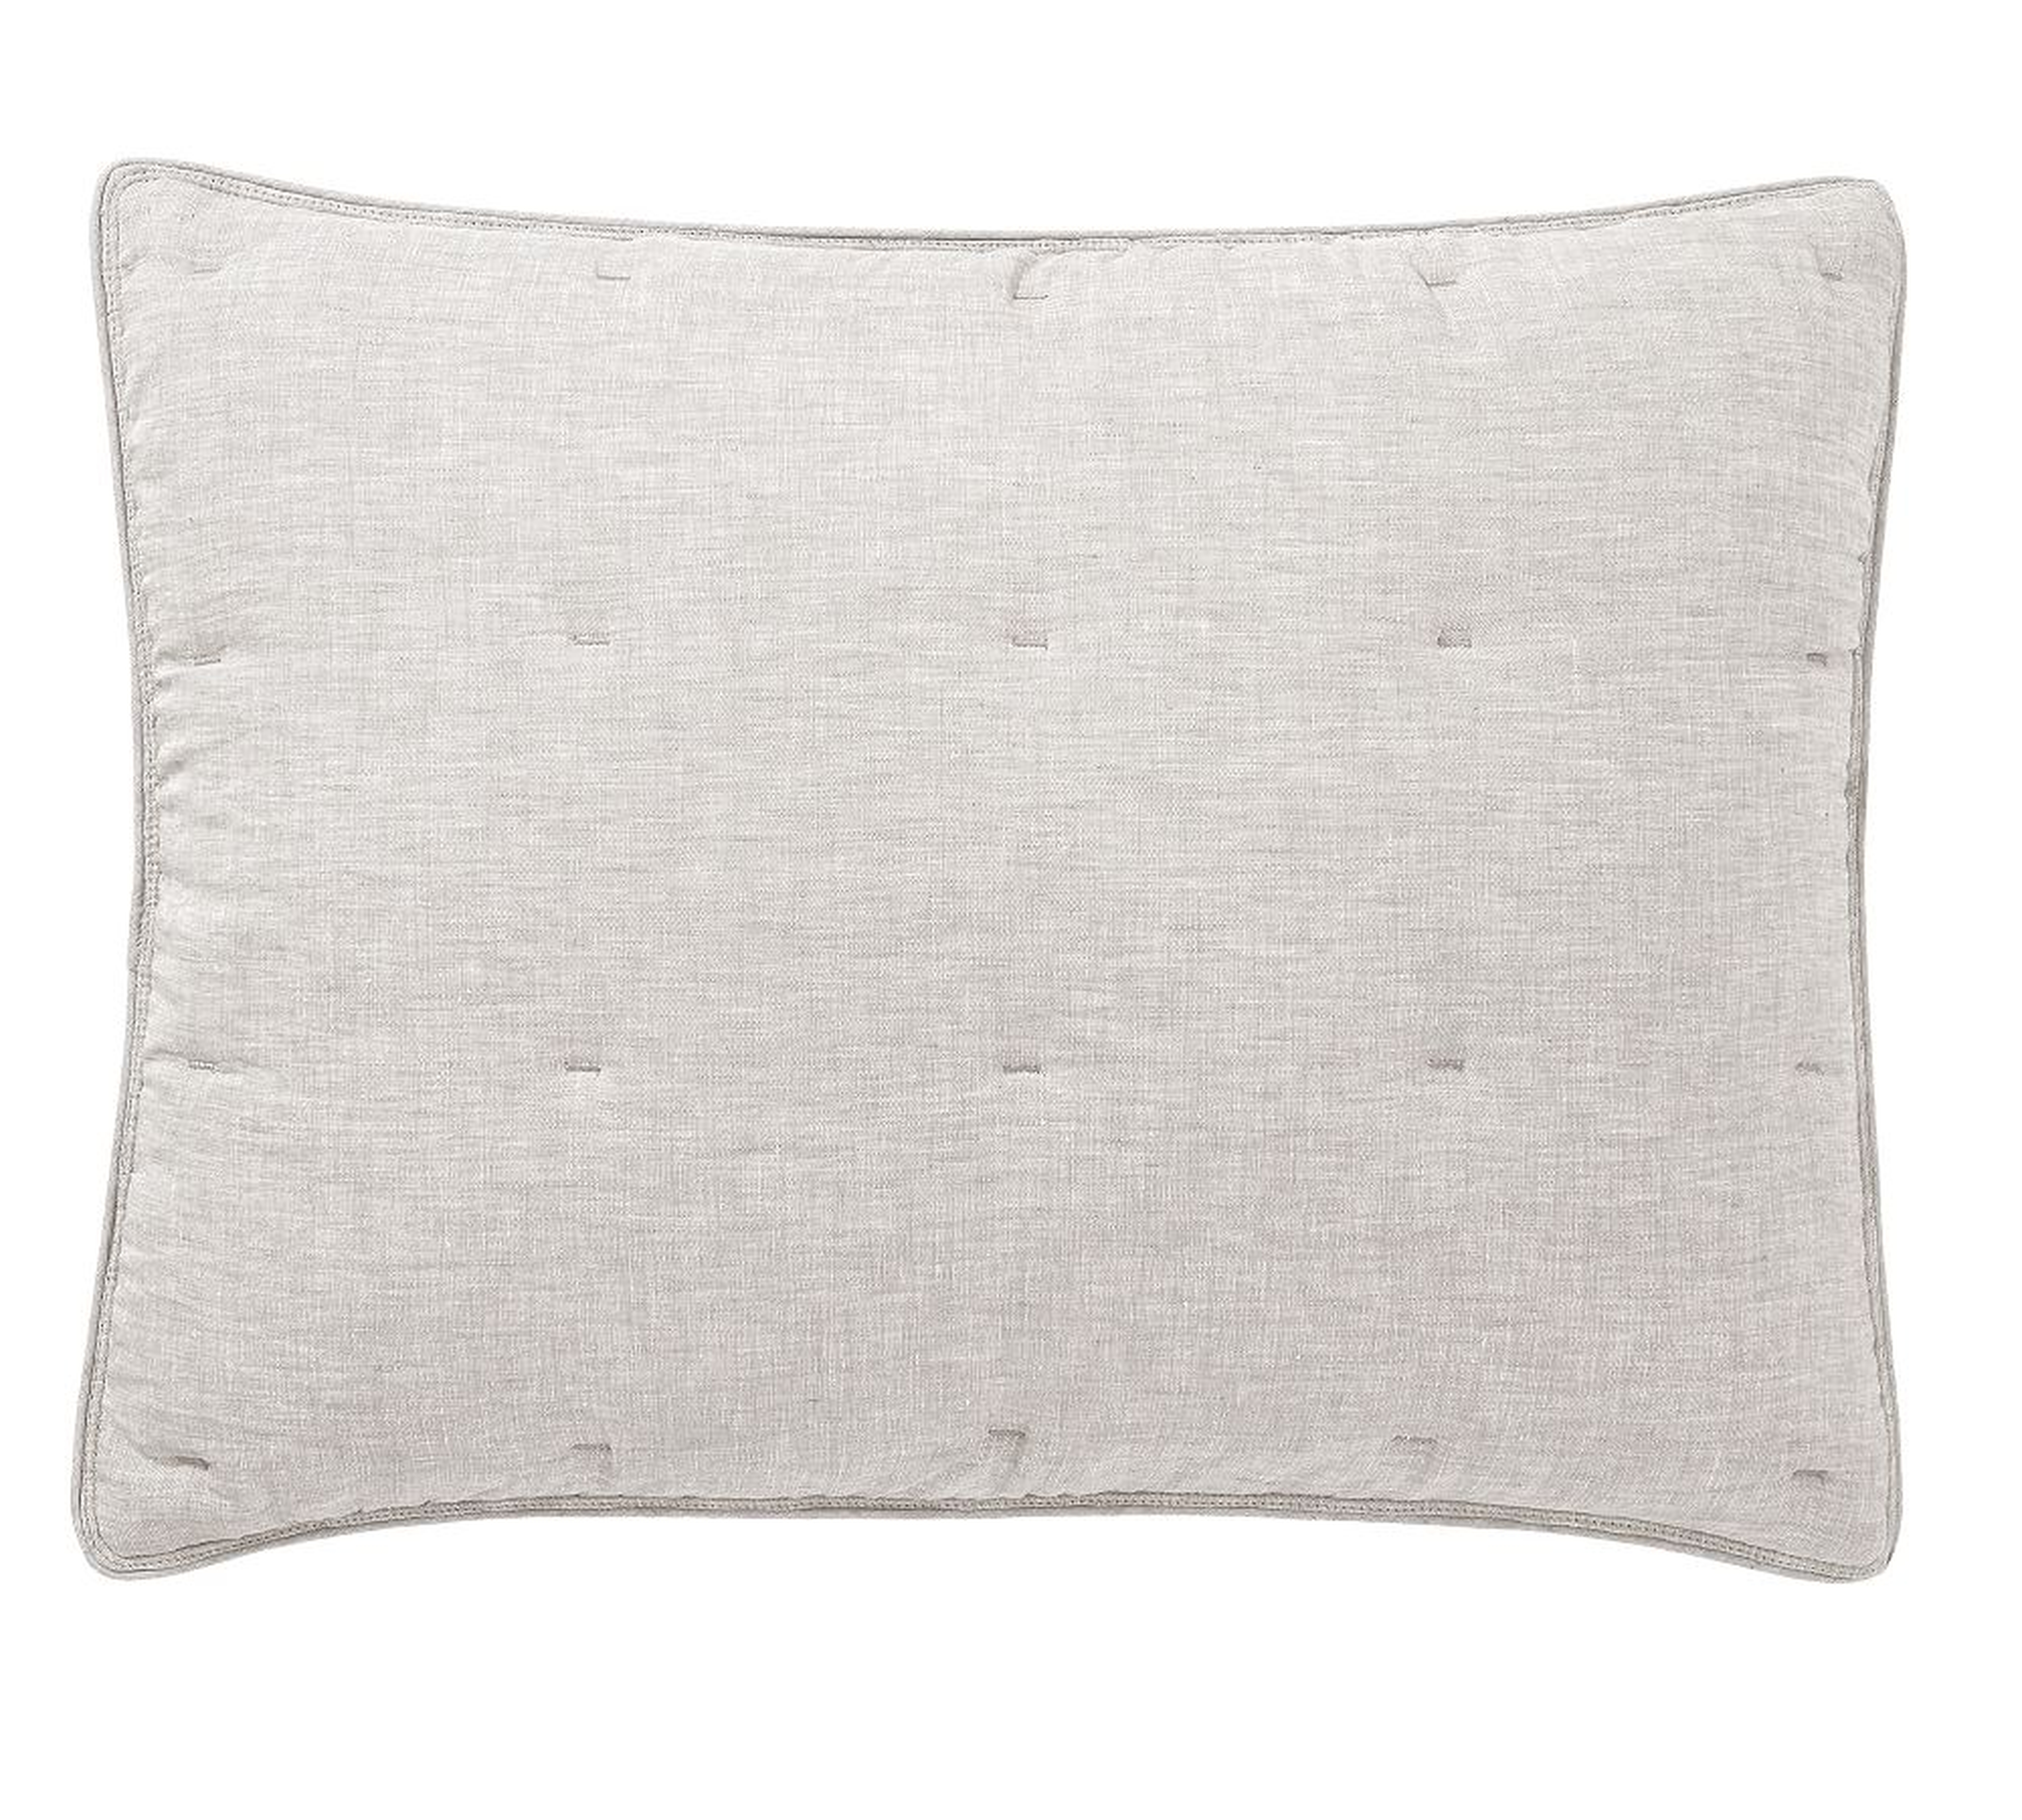 Belgian Flax Linen Comforter Shams, Standard, Soft Gray, Set of 2 - Pottery Barn